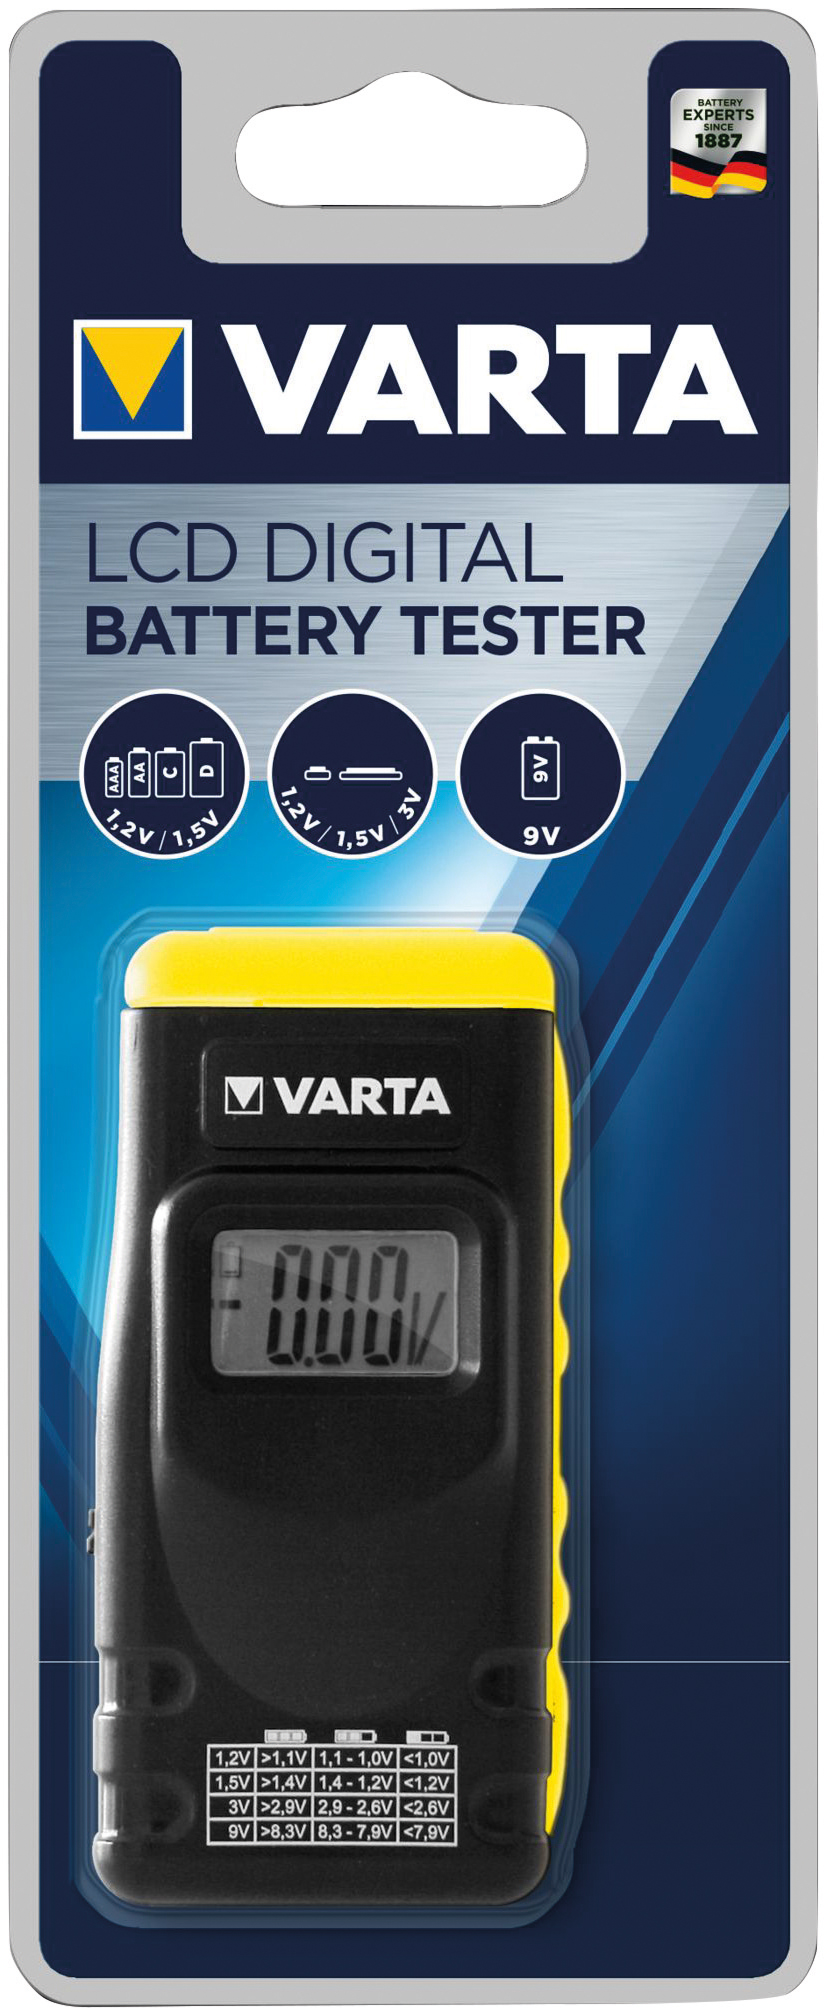 VARTA Batterie Tester LCD digital